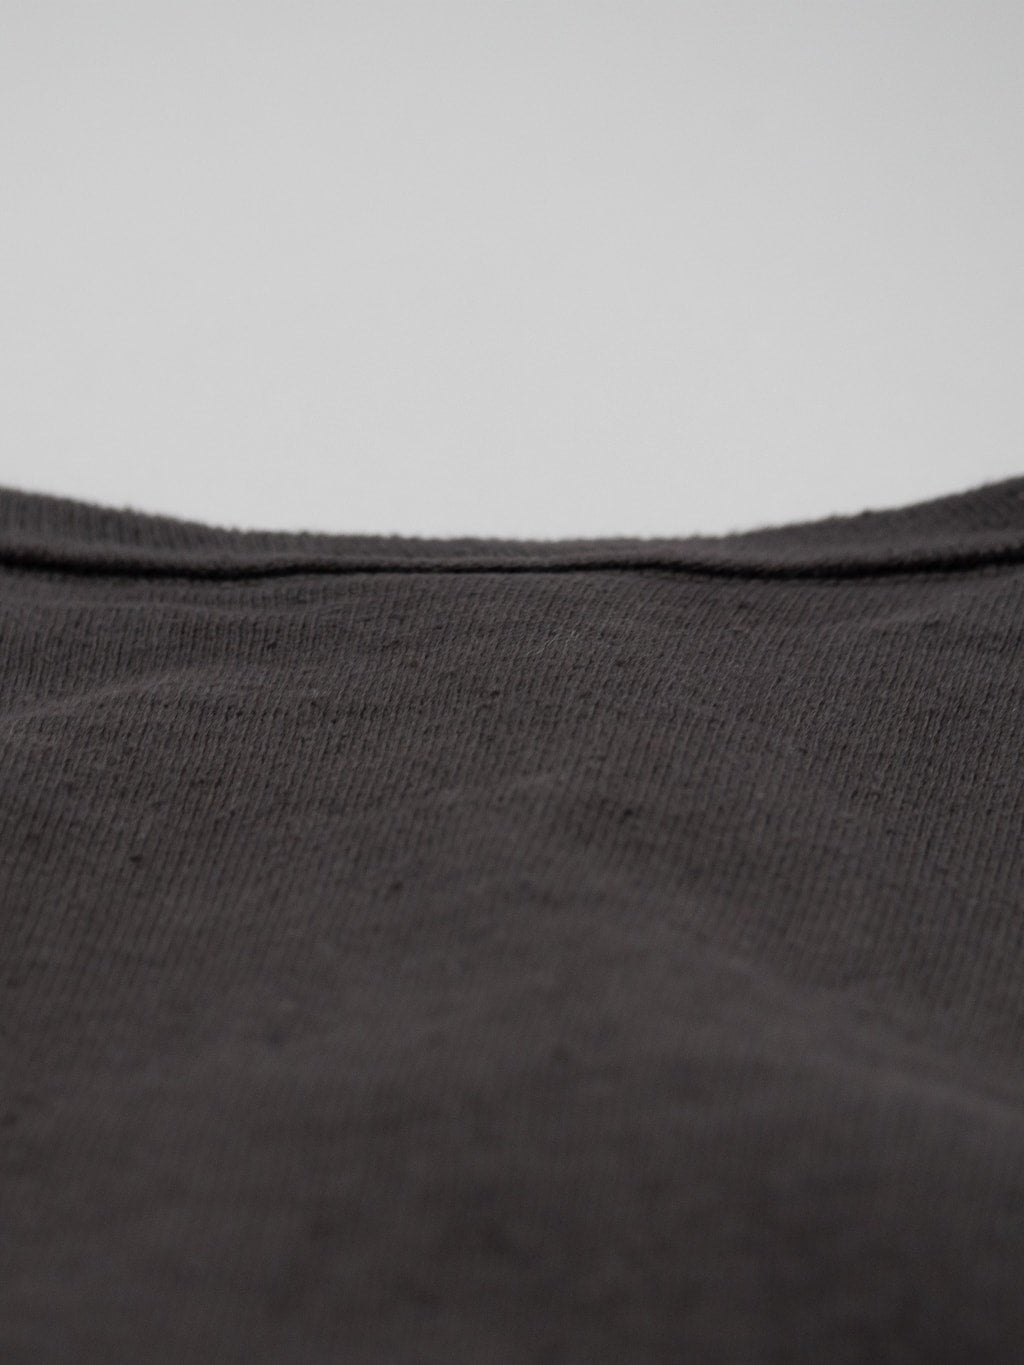 samurai jeans japanese cotton slub tshirt henley kuromame collar